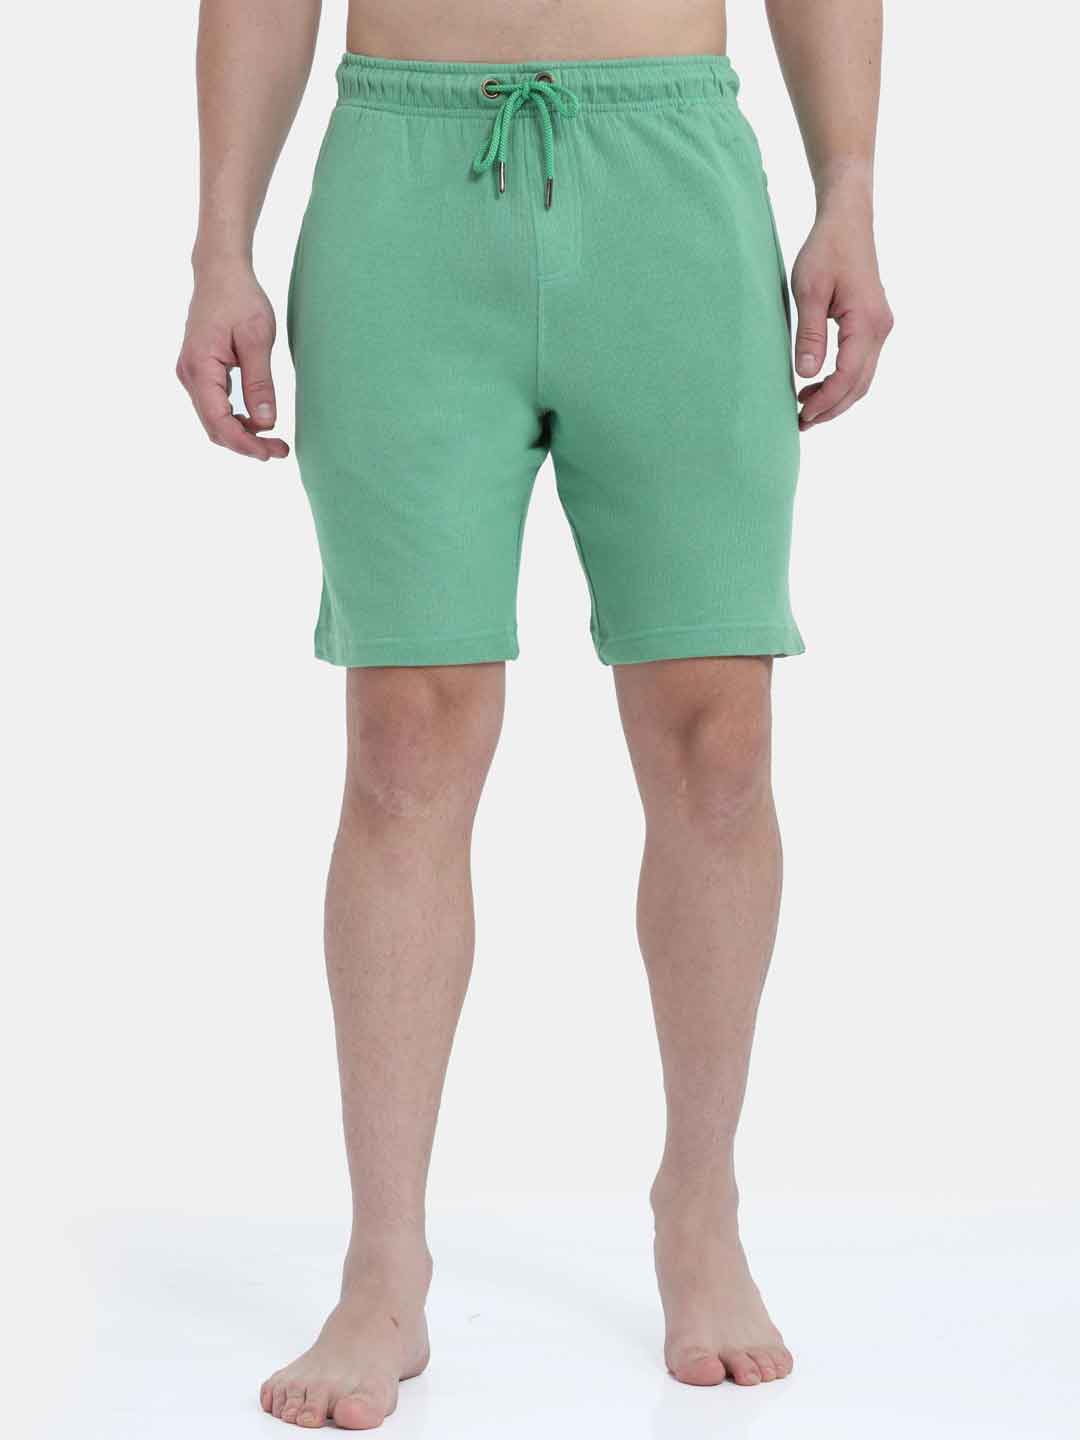 The Green Twists Everywear Shorts